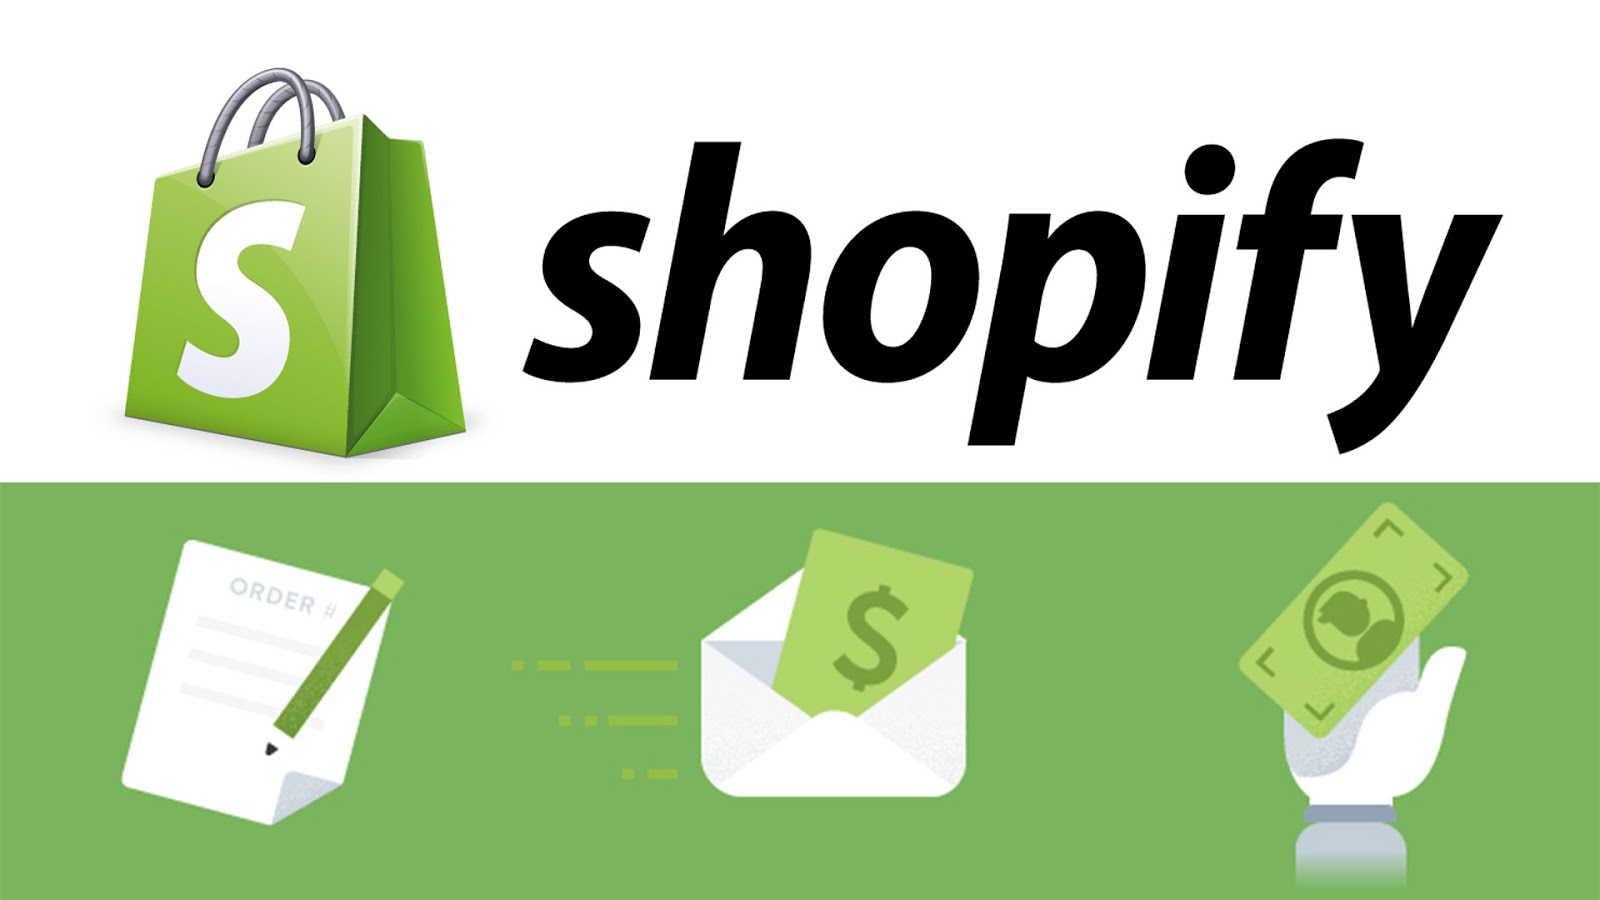 Cara Menjual Buku di Shopify: Langkah demi Langkah